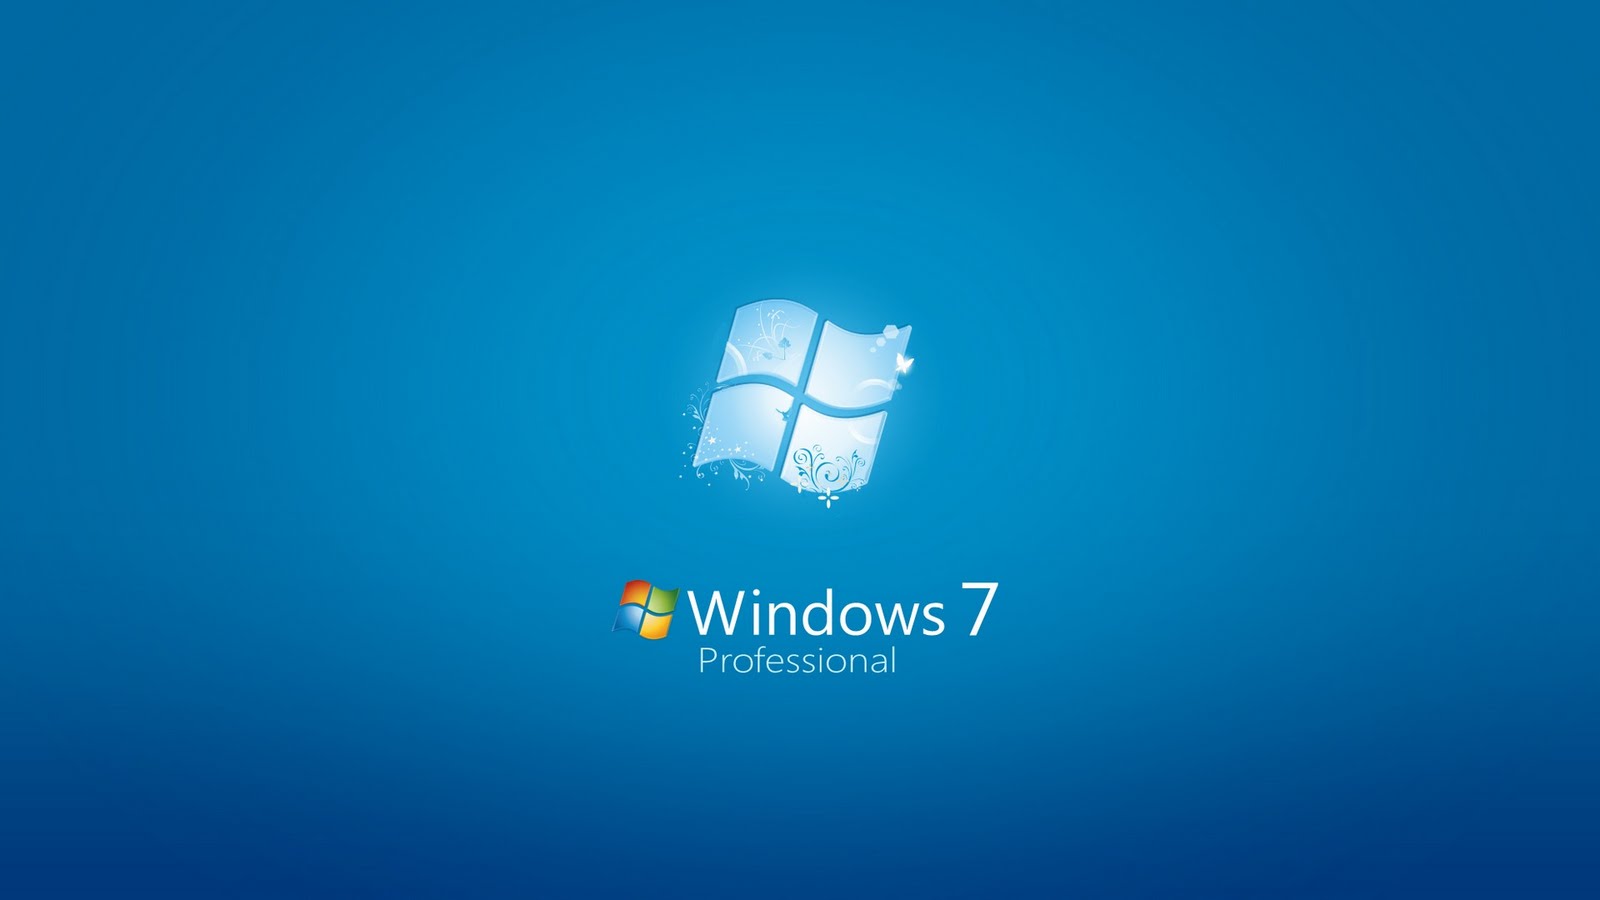 Windows 7 Professional 3D Wallpaper | Cool Laptop Wallpapers